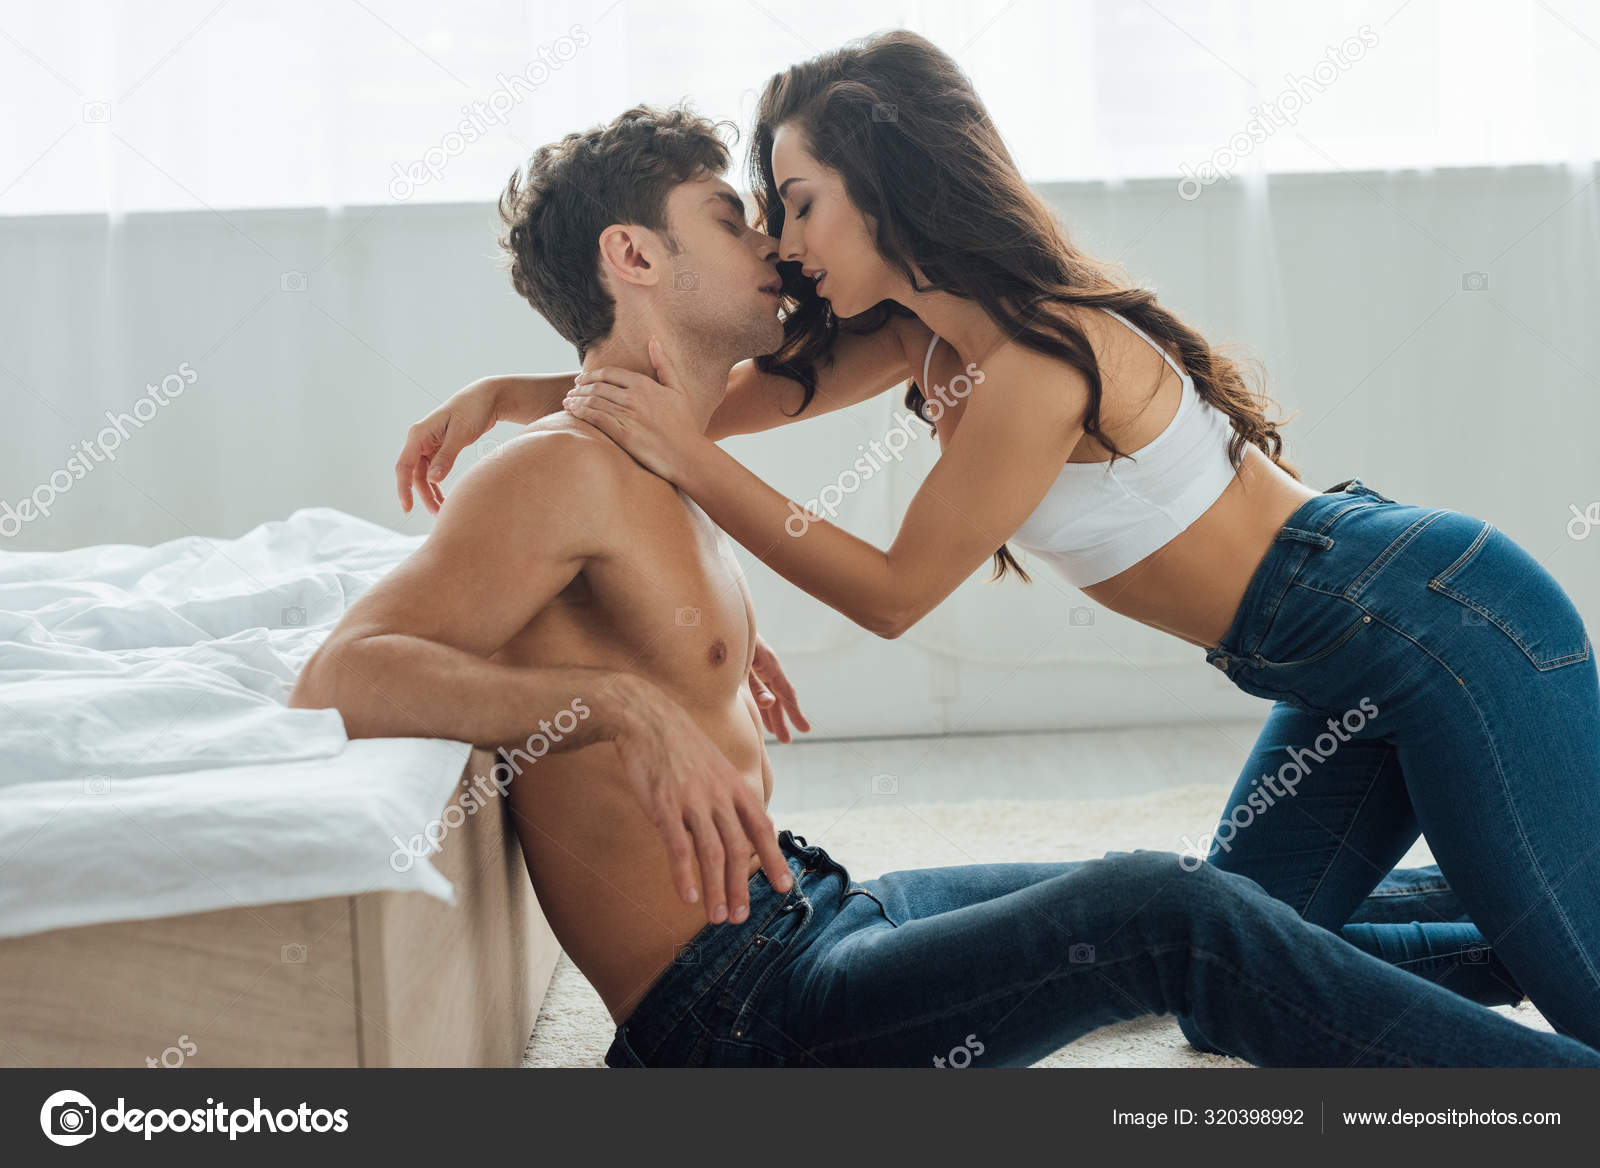 Hot Girl Kissing Boyfriend